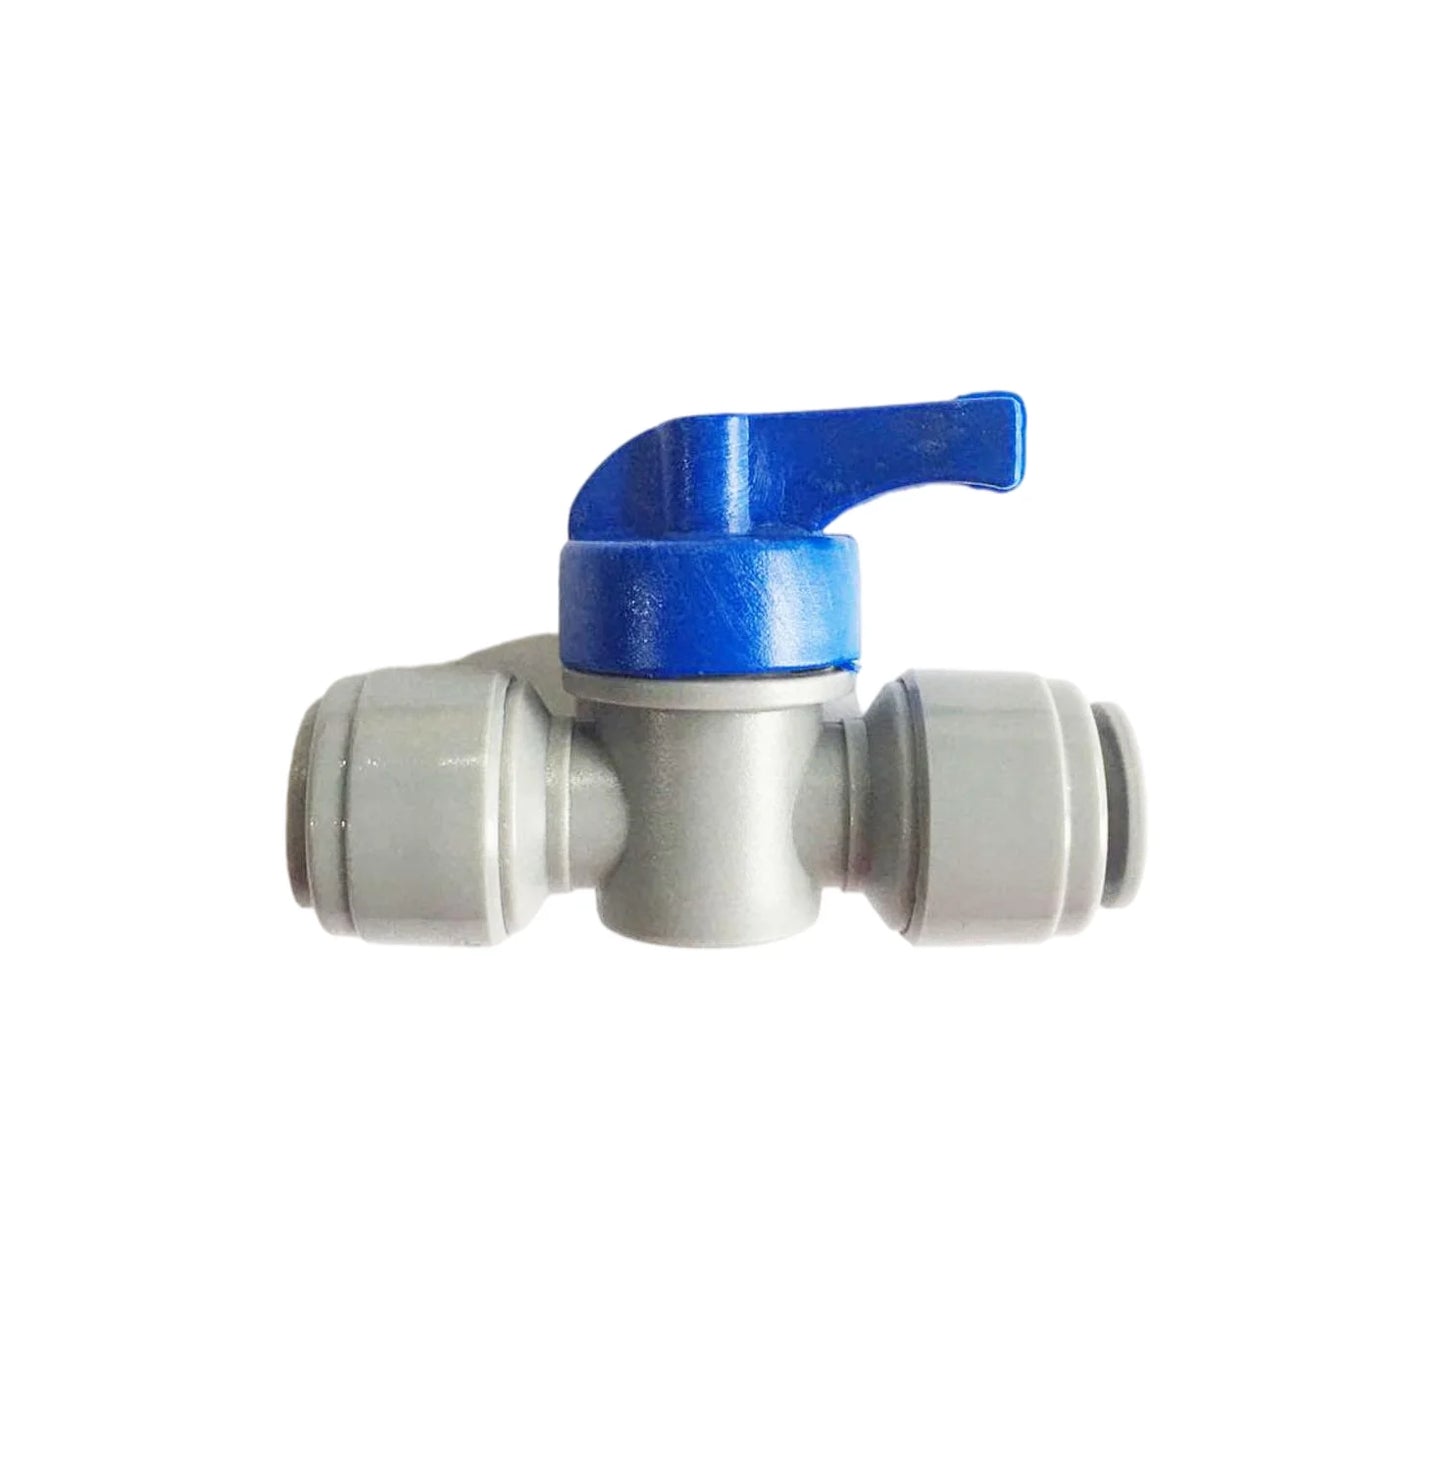 Kegland DUOTIGHT 9.5mm/3/8 BALL VALVE SHUT OFF VALVE - plastic quick connect pipe hose Connector